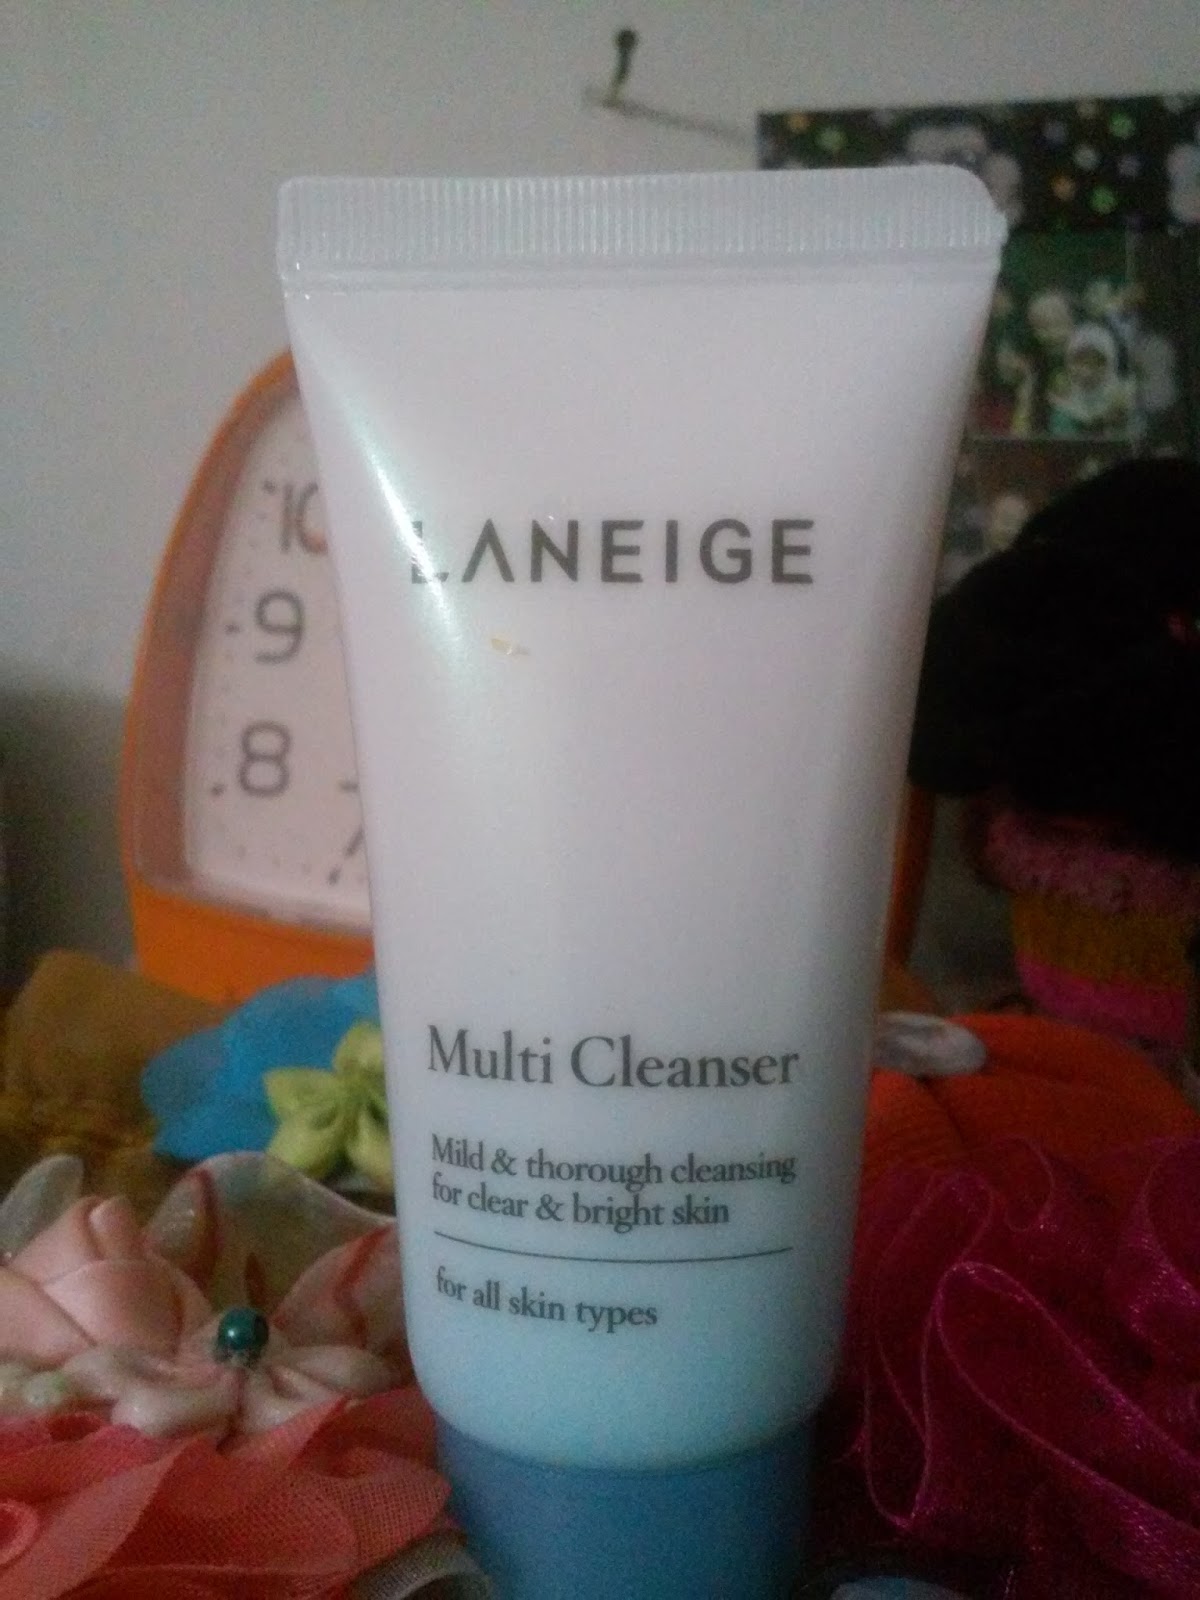 Laneige Cleanser. Laneige Multi Deep-clean Cleanser 30ml. Secret Skin cc Bubble Multi Cleanser. Multi cleanser